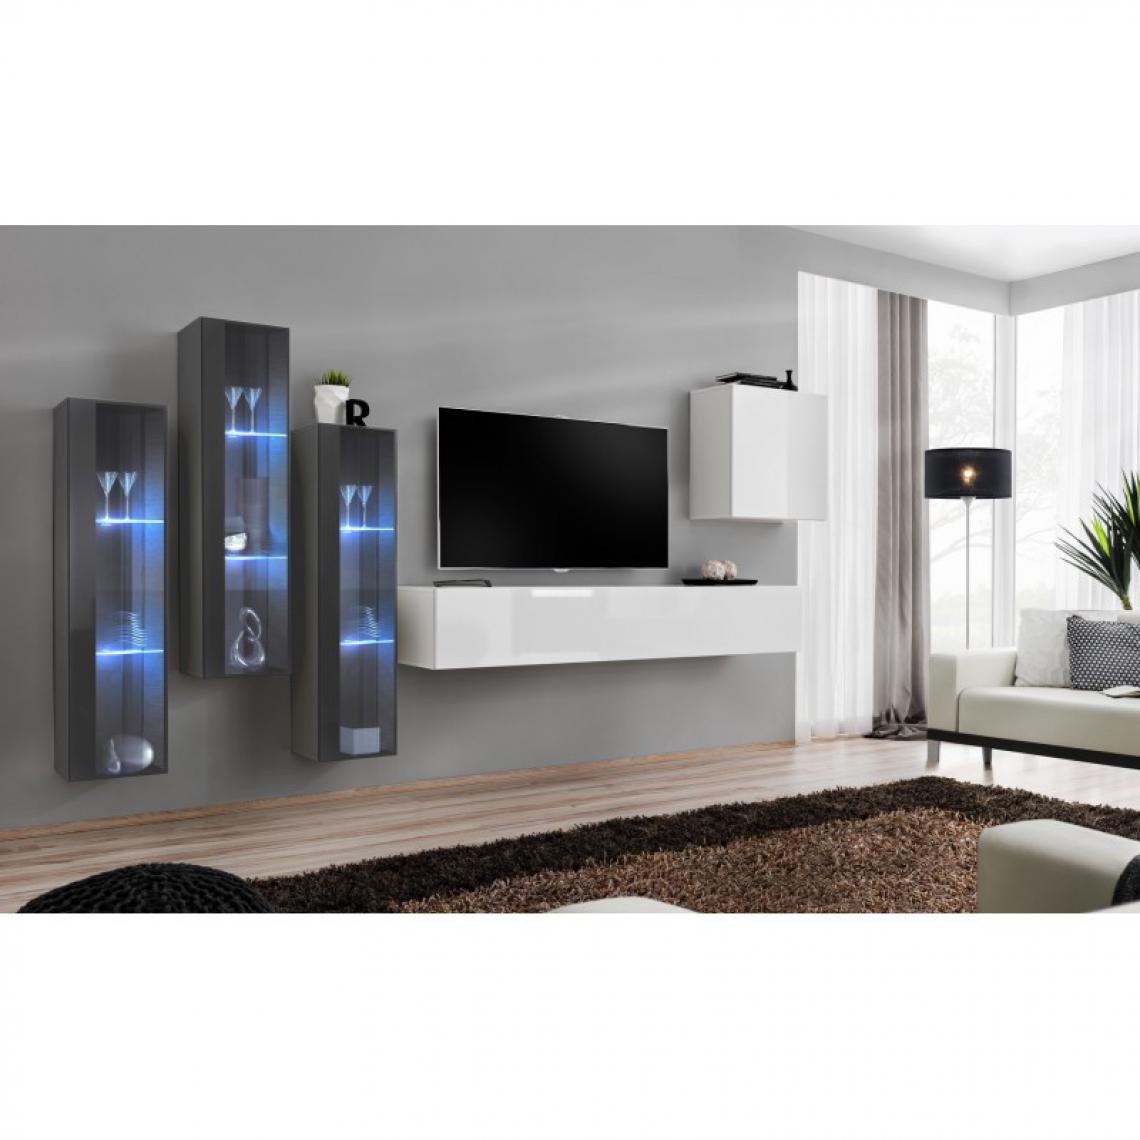 Ac-Deco - Meuble TV Mural Design Switch XIII 330cm Blanc & Gris - Meubles TV, Hi-Fi